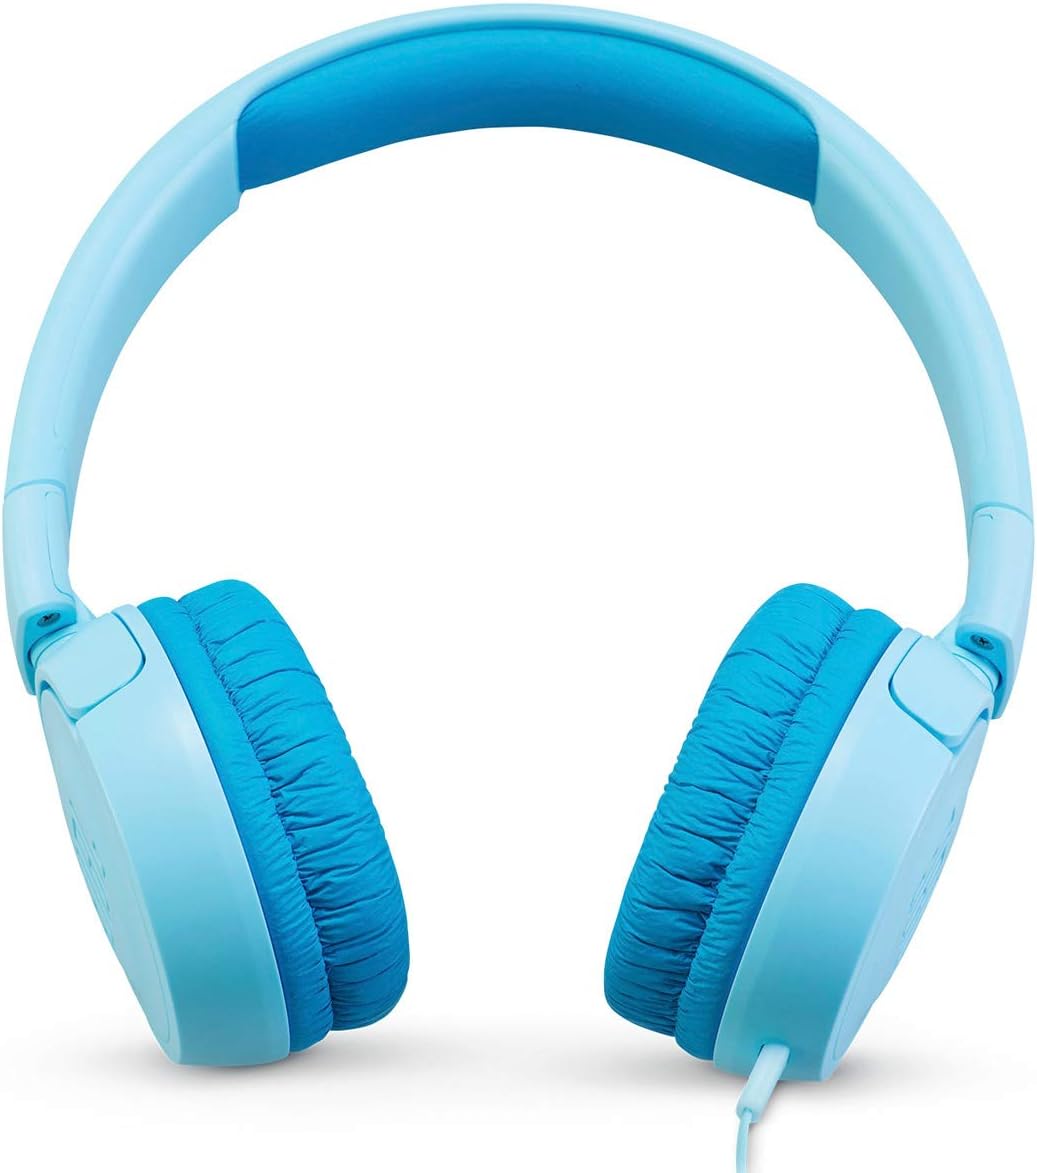 JBL JR 300BT Folding On-Ear Stereo Headphones for Kids - Blue (Refurbished)